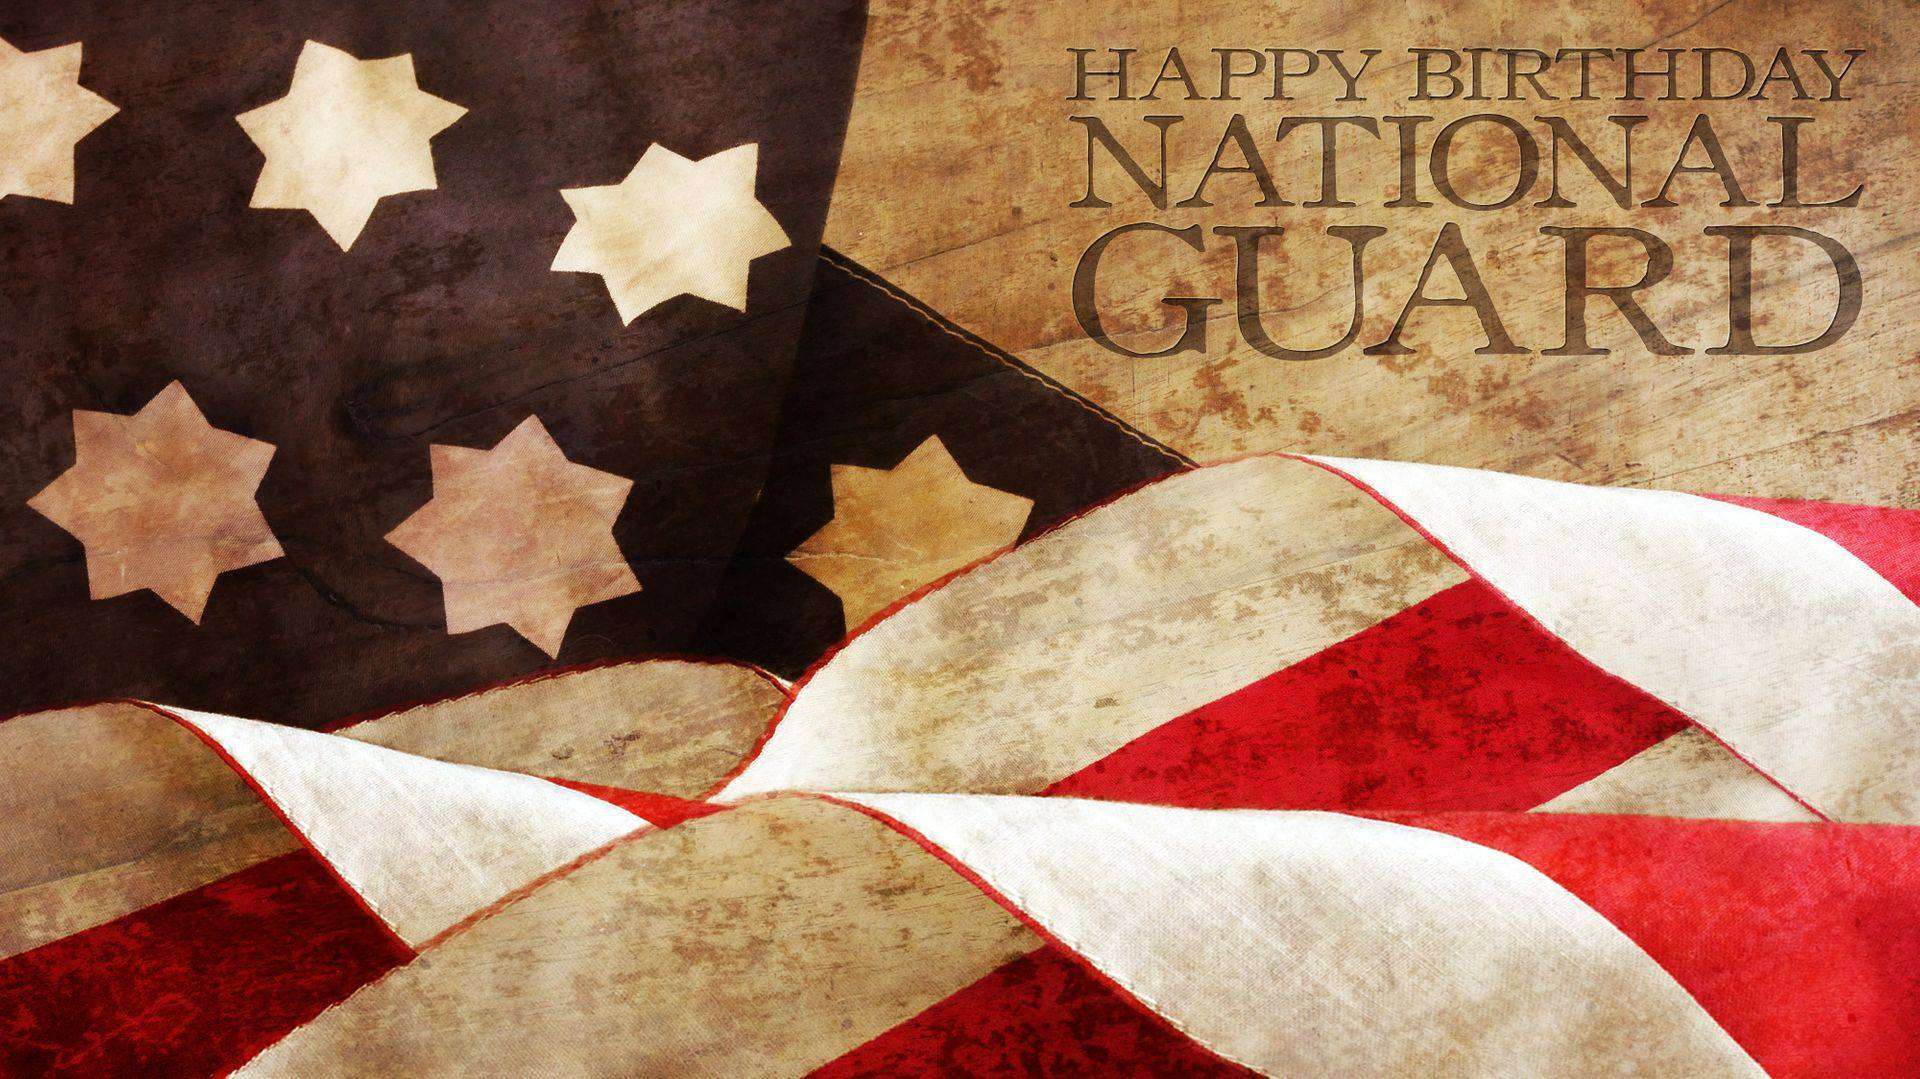 U.S. National Guard Birthday Wishes Beautiful Image